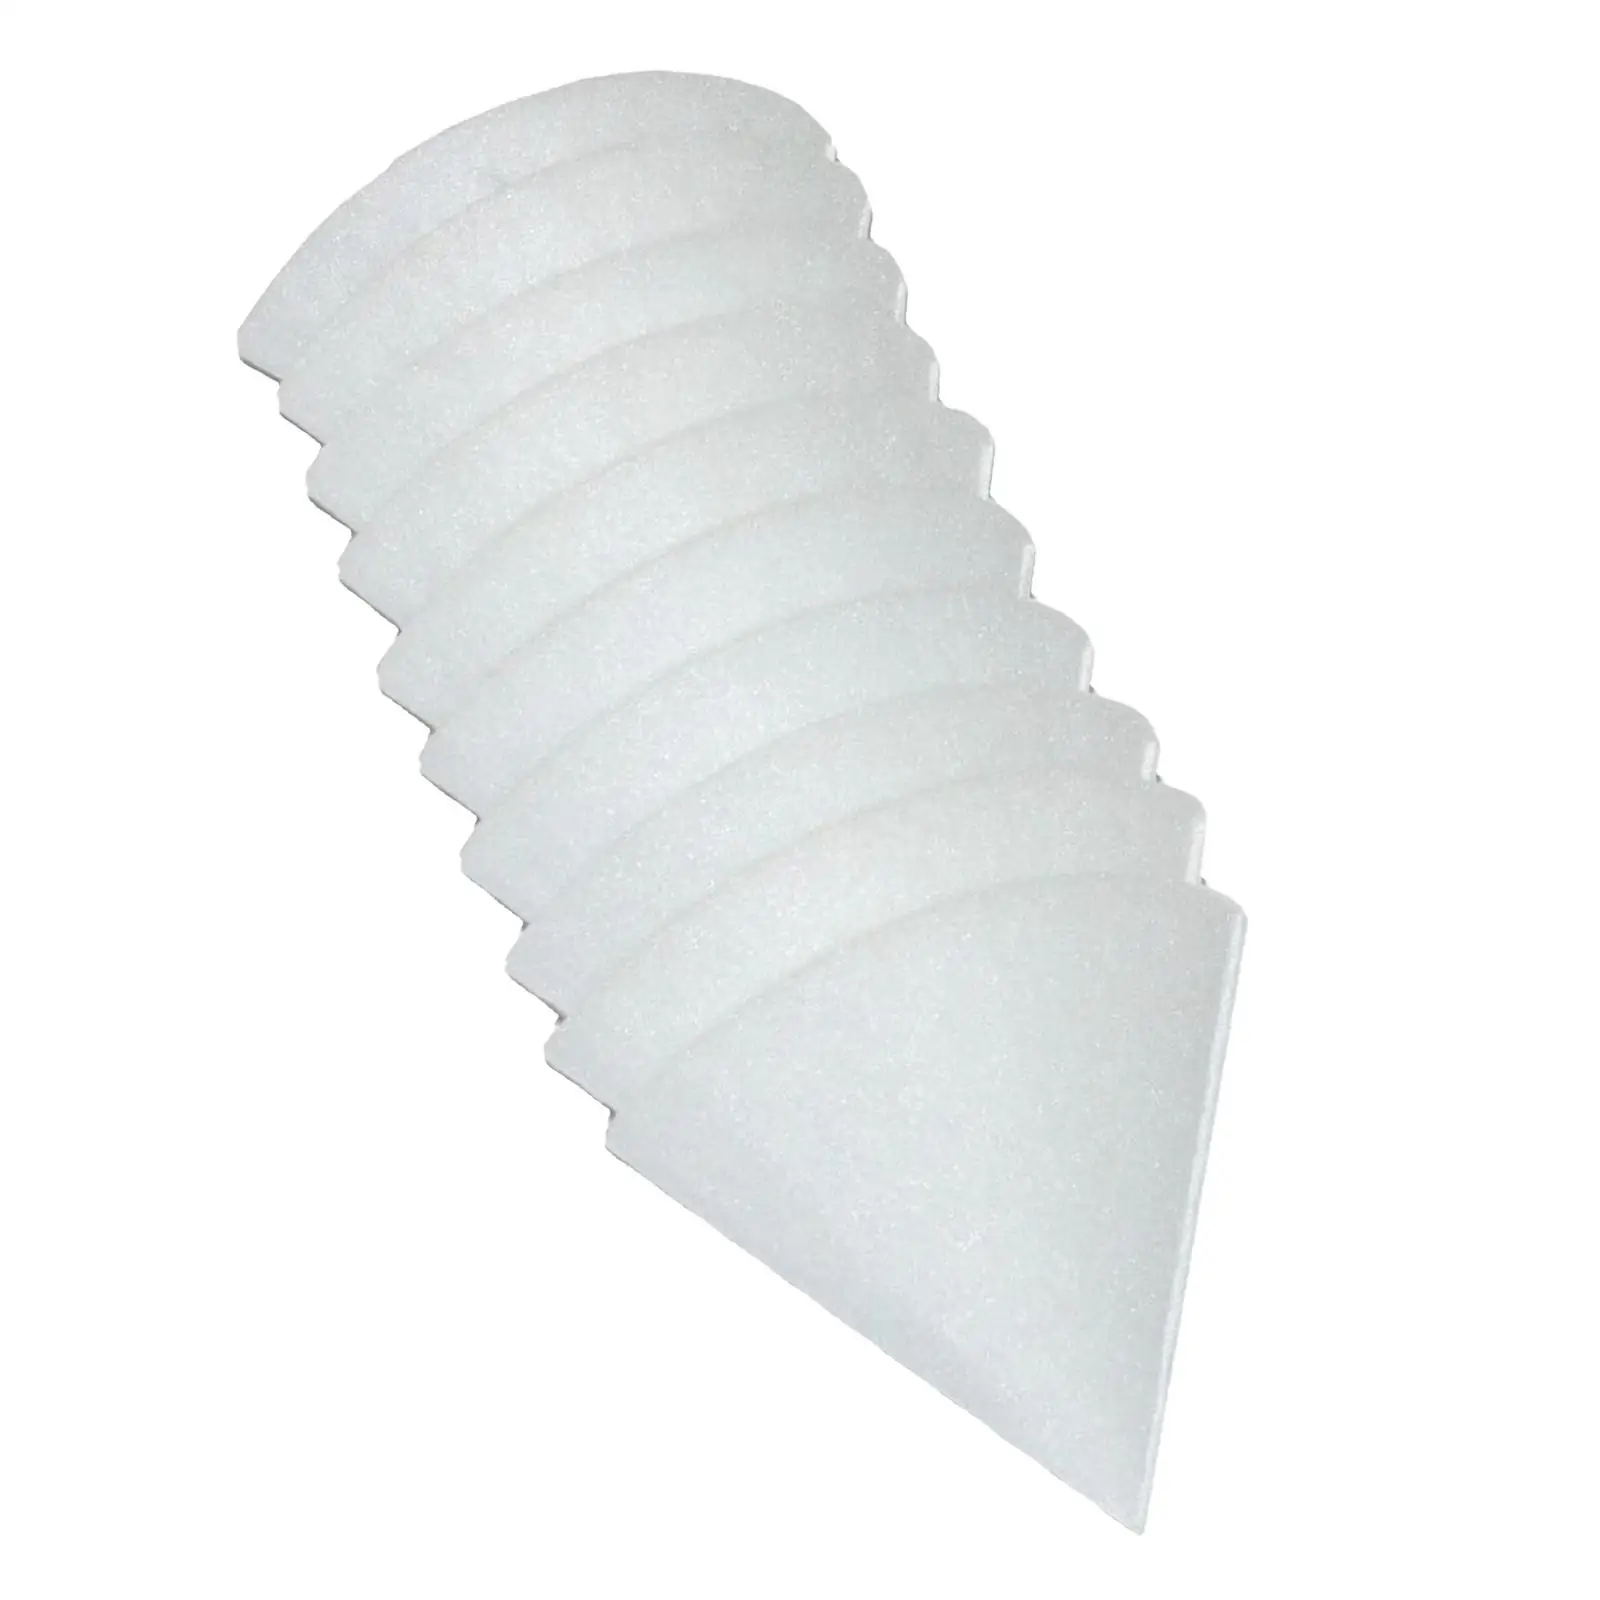 10x Cone Paper Filter  Dust Business Air Purifier Reusable Floor Vent